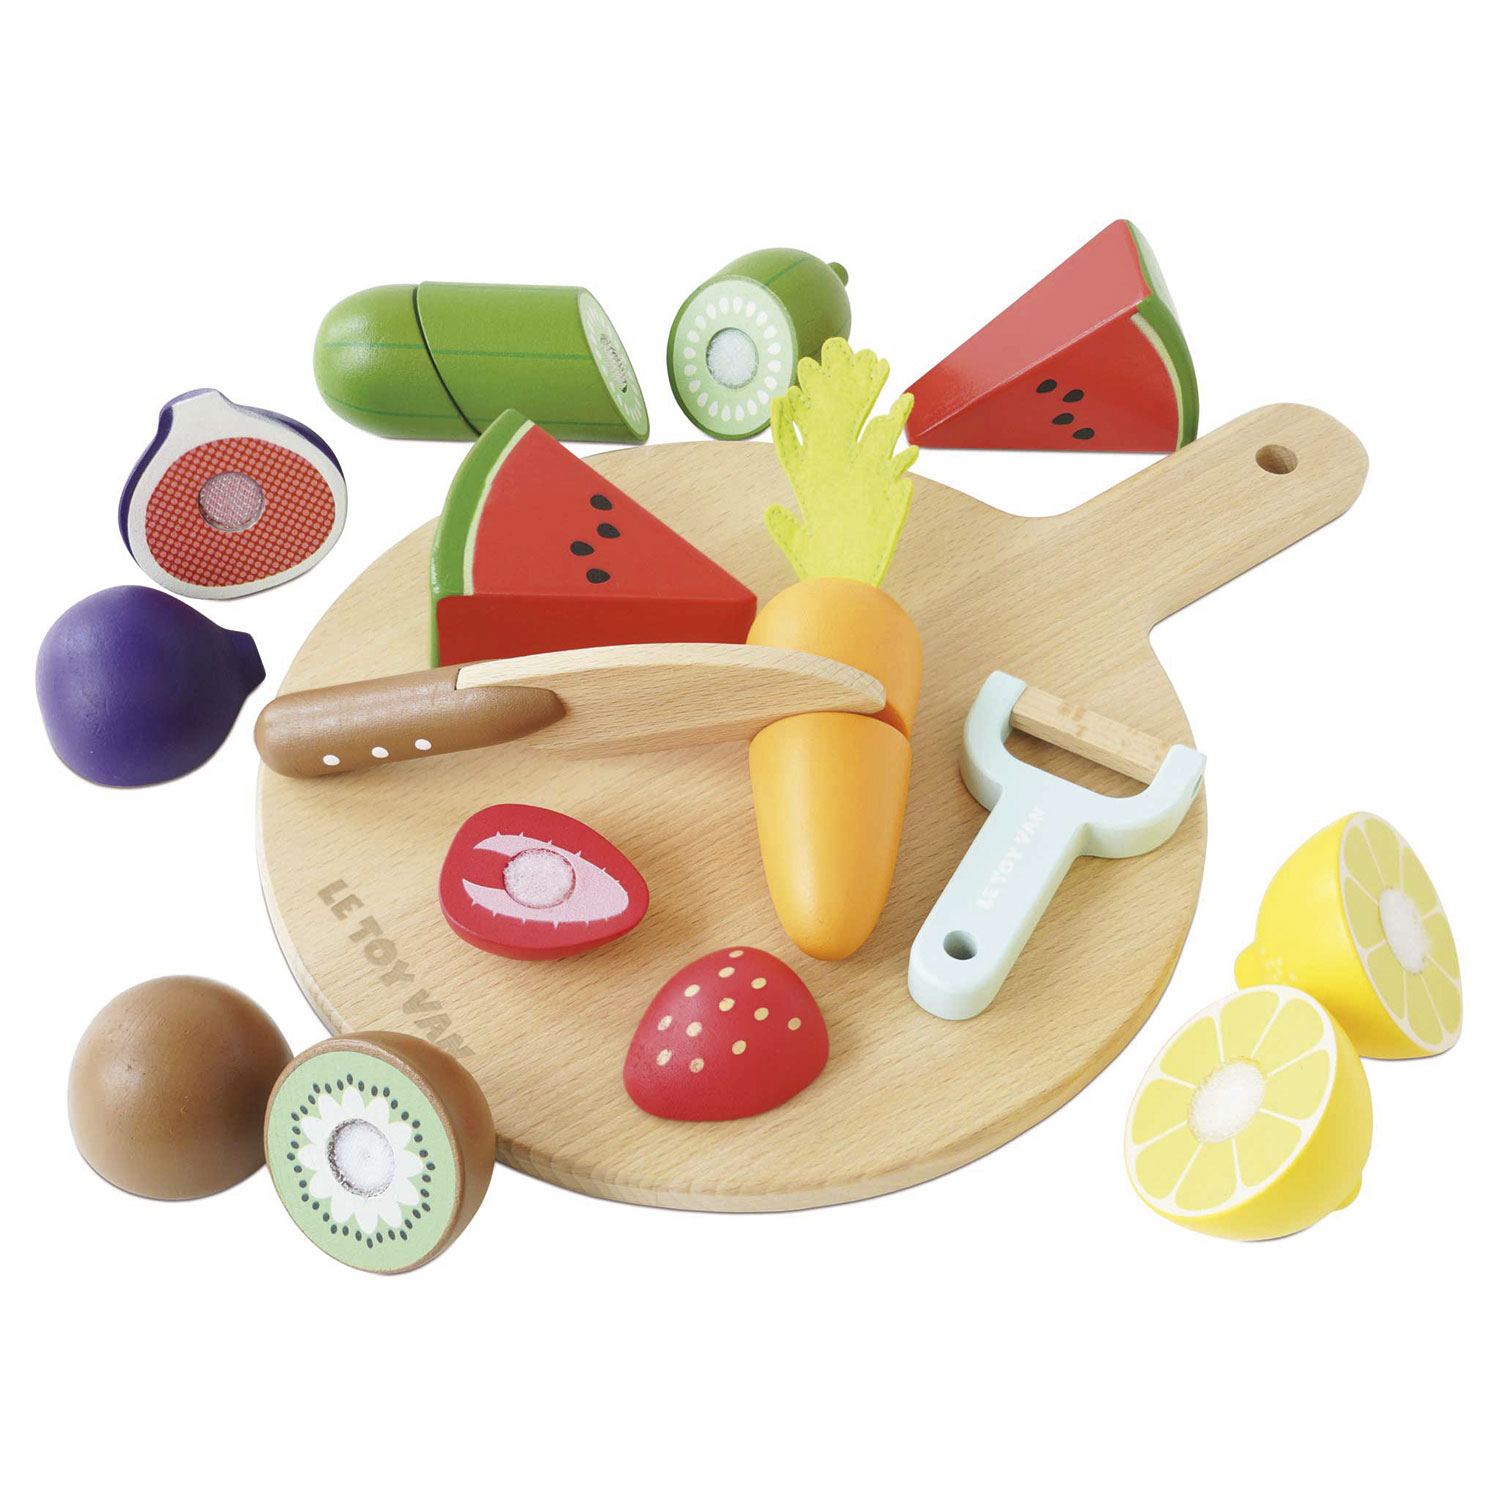 Schneidebrett mit Superfood / Wooden Chopping Board & Sliceable Play Food